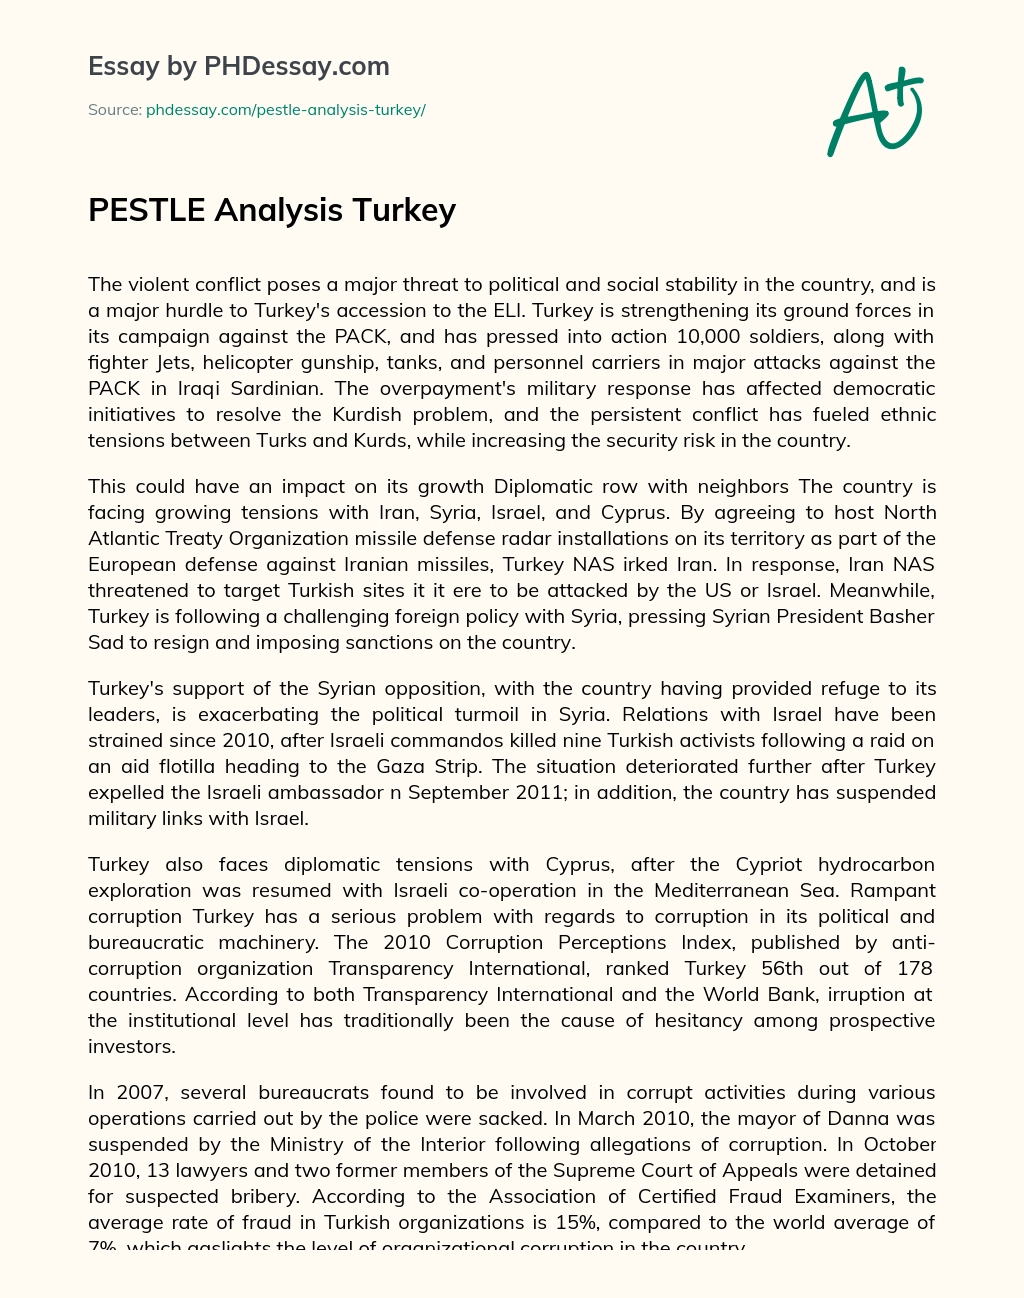 PESTLE Analysis Turkey essay